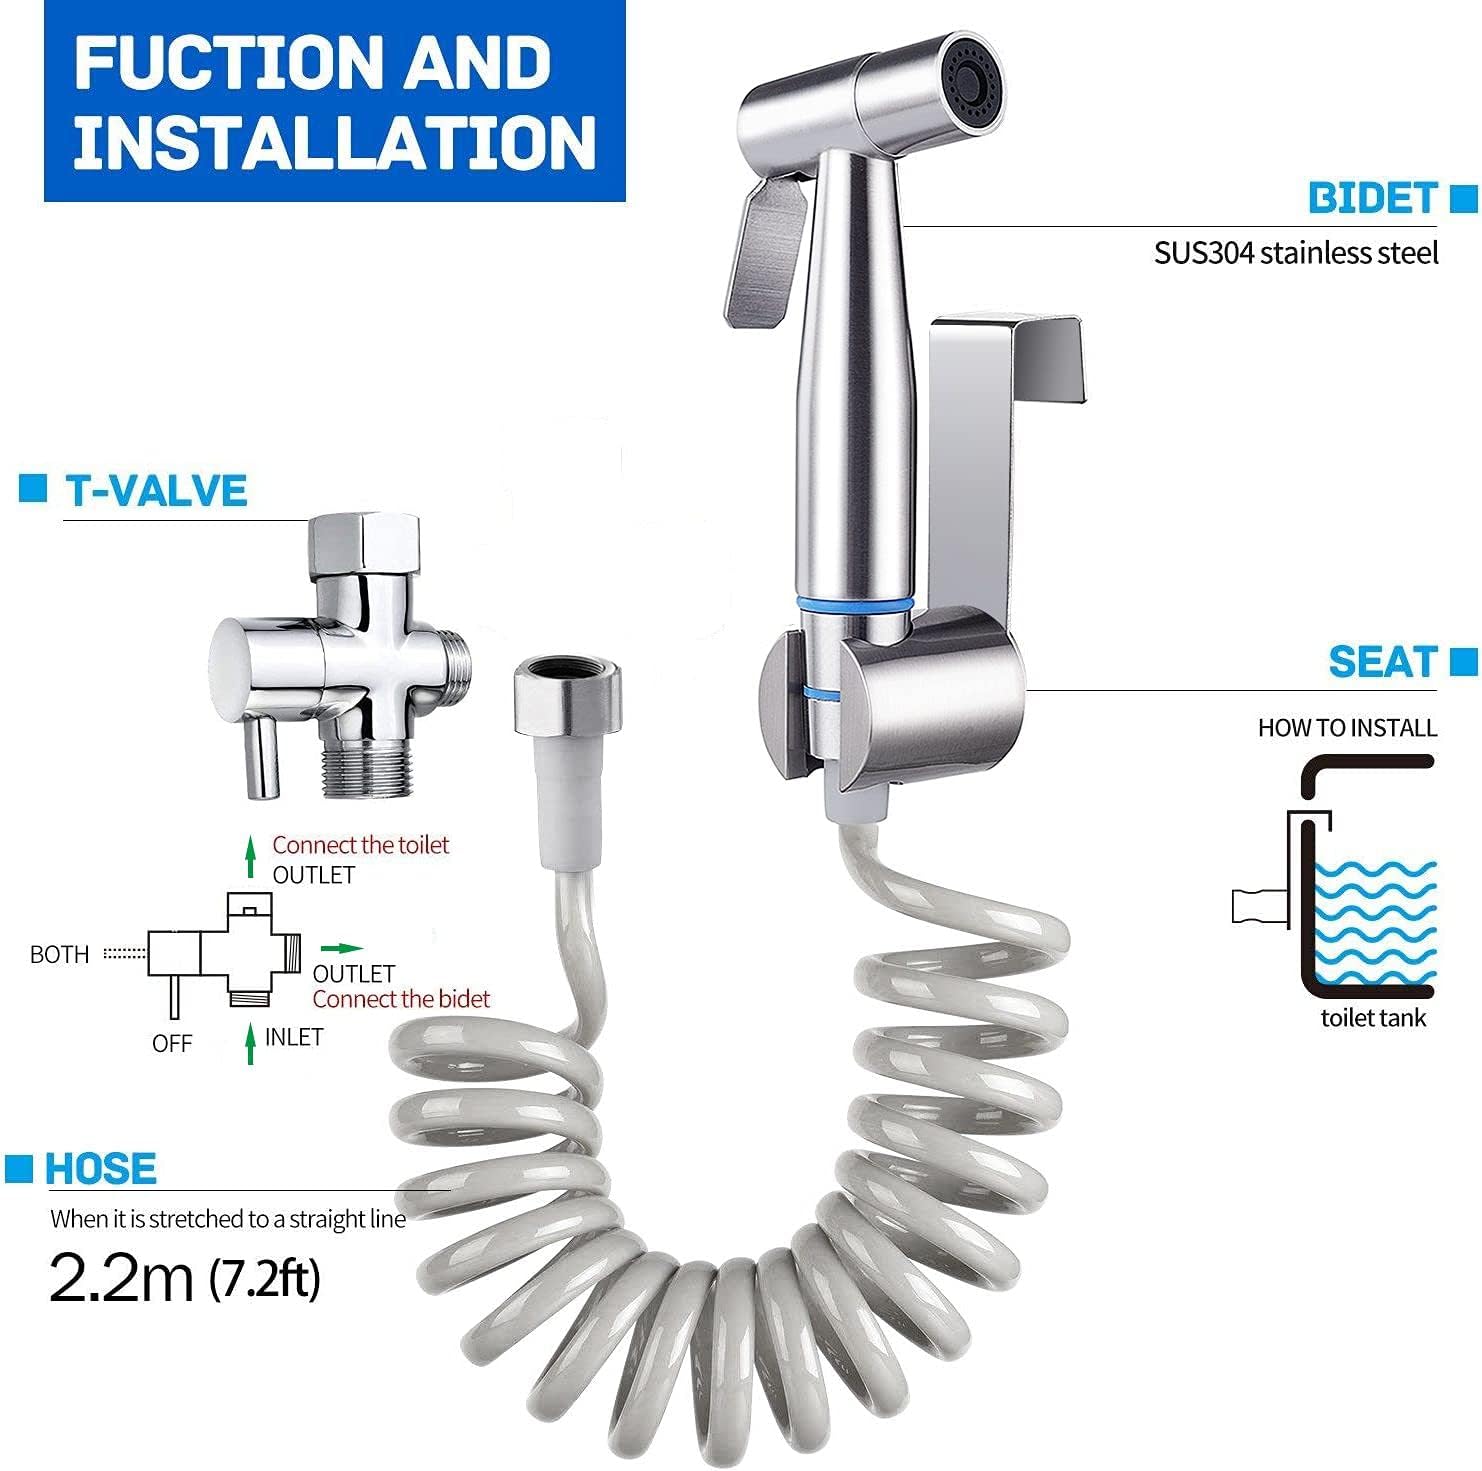 TURLEE Handheld Bidet Sprayer for Toilet -Brass T-valve Adapter, Sprayer Adjustable Water Pressure Control with Bidet Retractable Spri